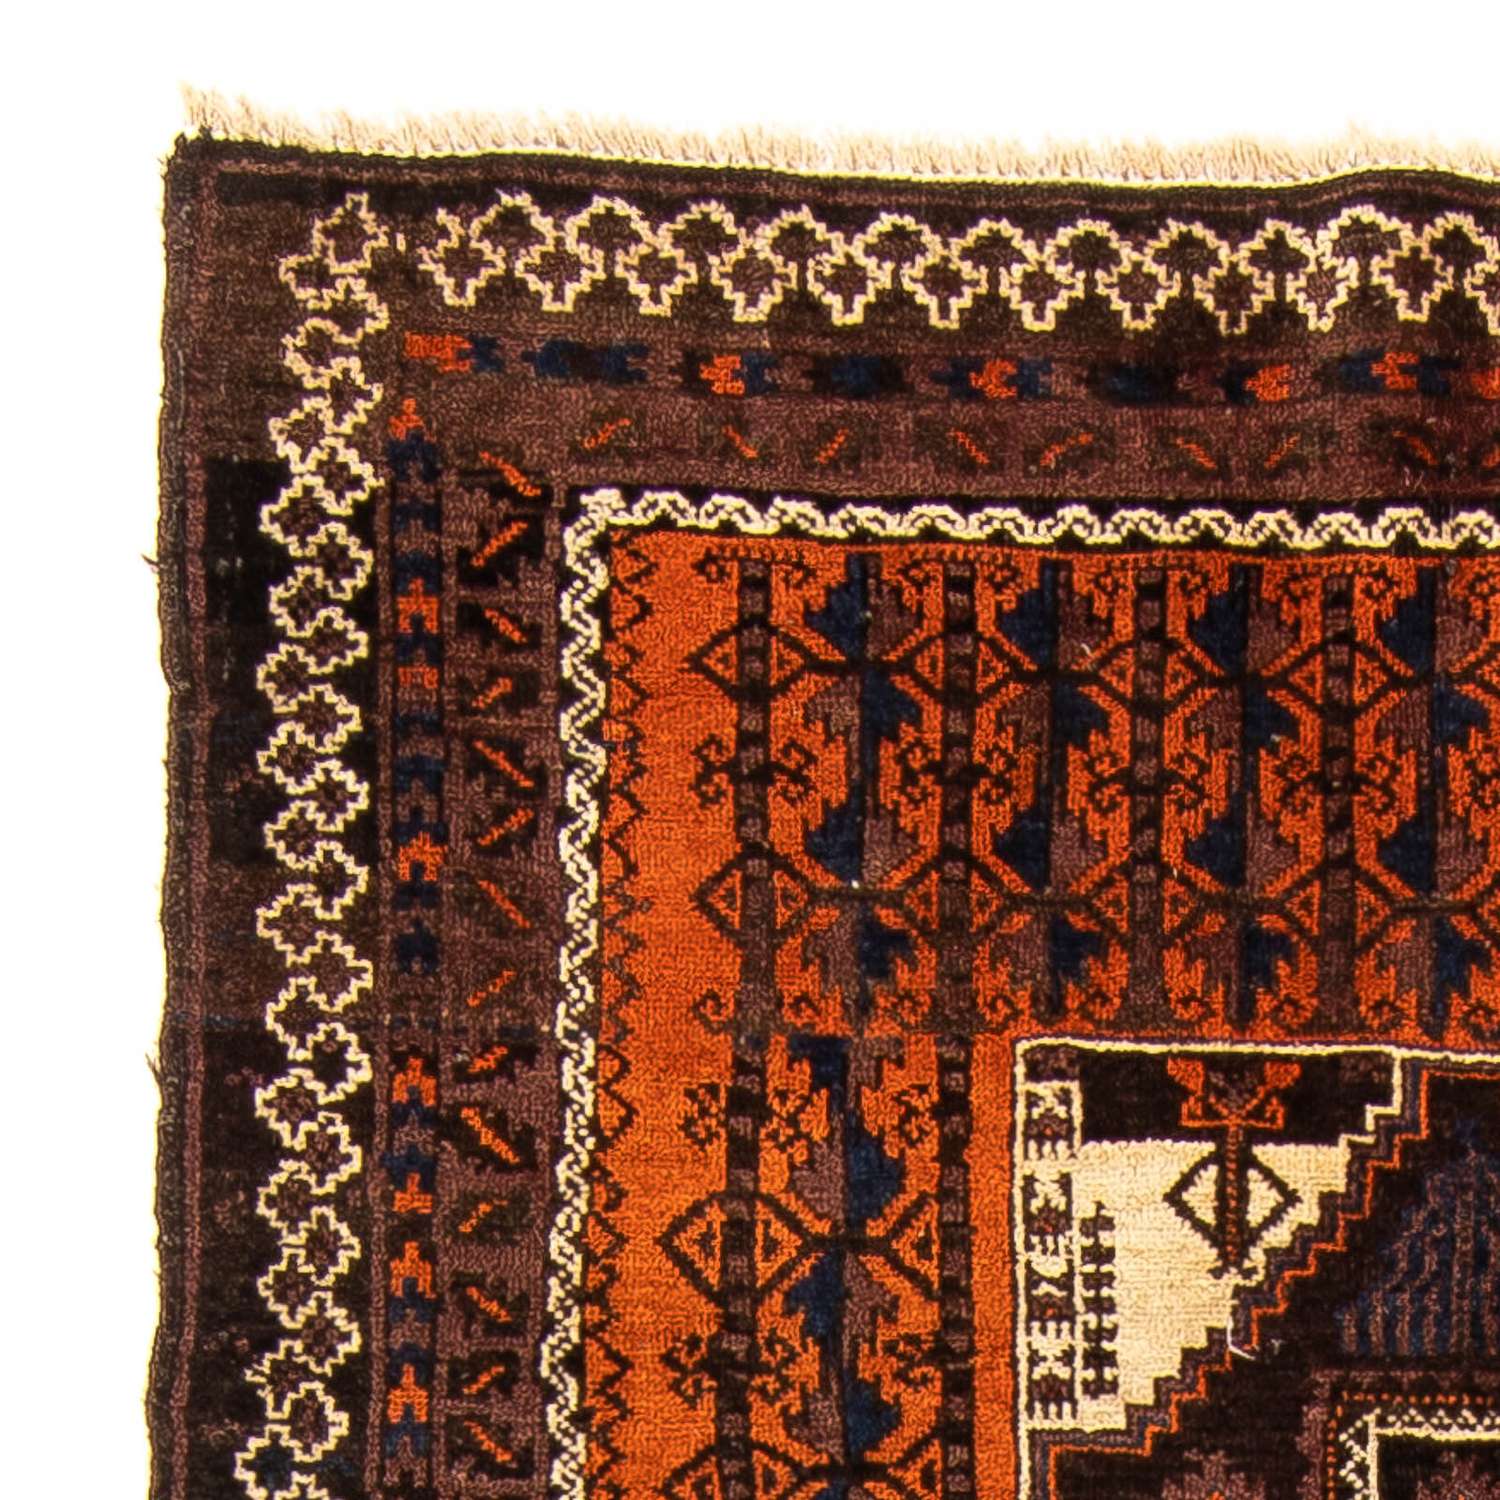 Baluch tapijt - 192 x 111 cm - bruin